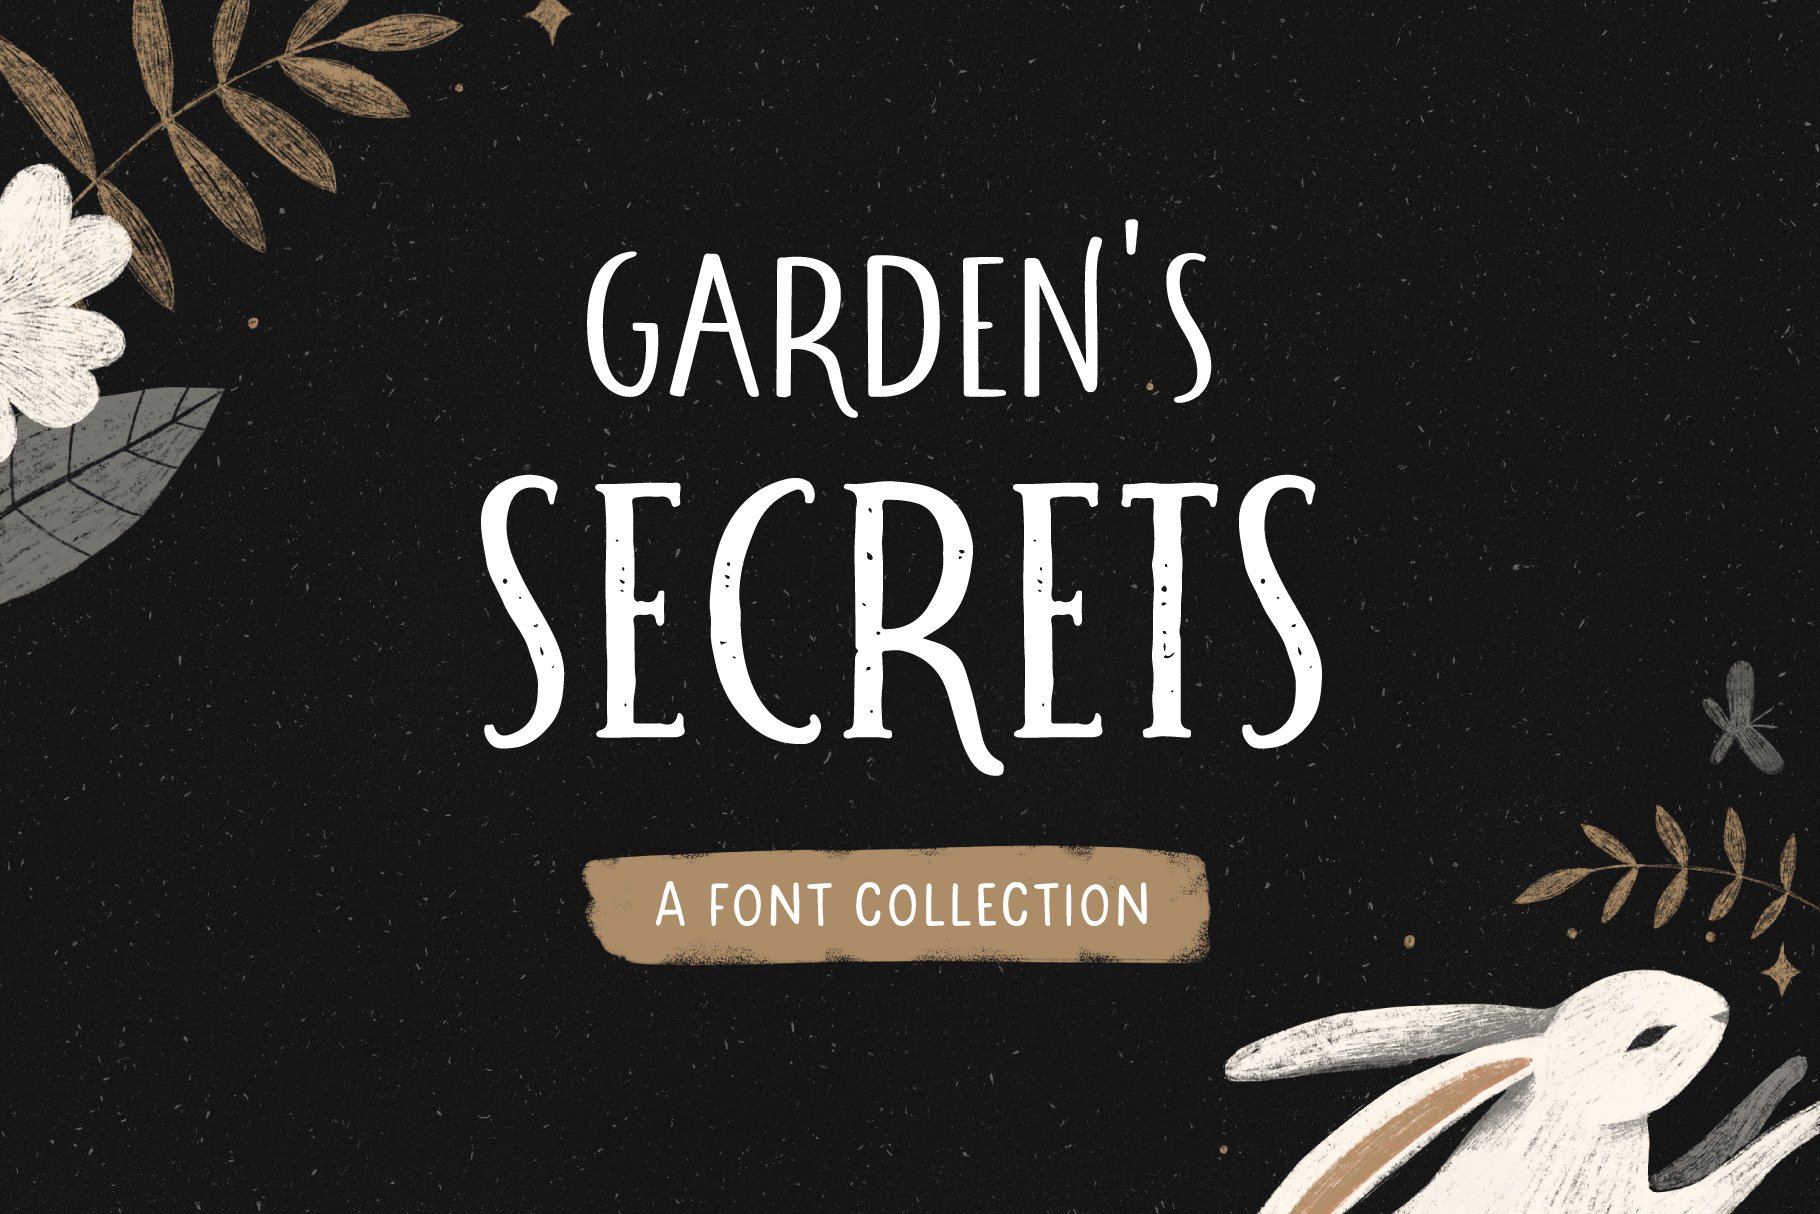 Garden’s secrets | Font Collection cover image.